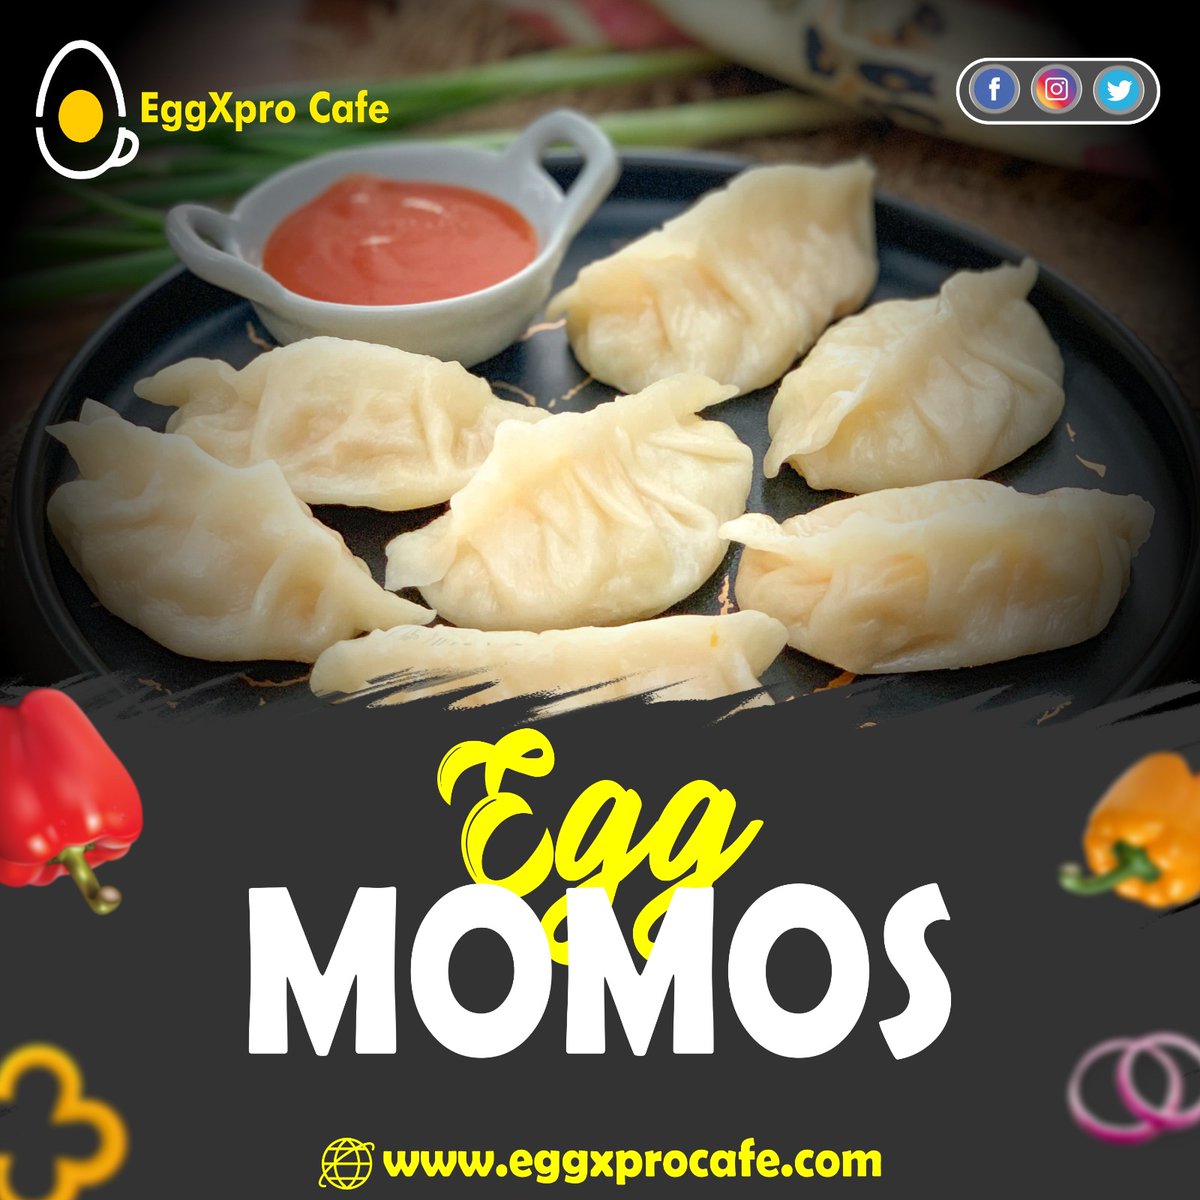 Eating your favorite Momos at Eggxpro Cafe, with old friends is still the dream of many😍
.
#eggxprocafe #eggmomos #momos #momosrecipe #eggbites #eggdishes #todaymenu #ingredients #eggfood #foodie #eggrecipes #eggrolls #eatfresh #eggmaggi #Eggxprocafeoutlet #keepsmiling #eggburji